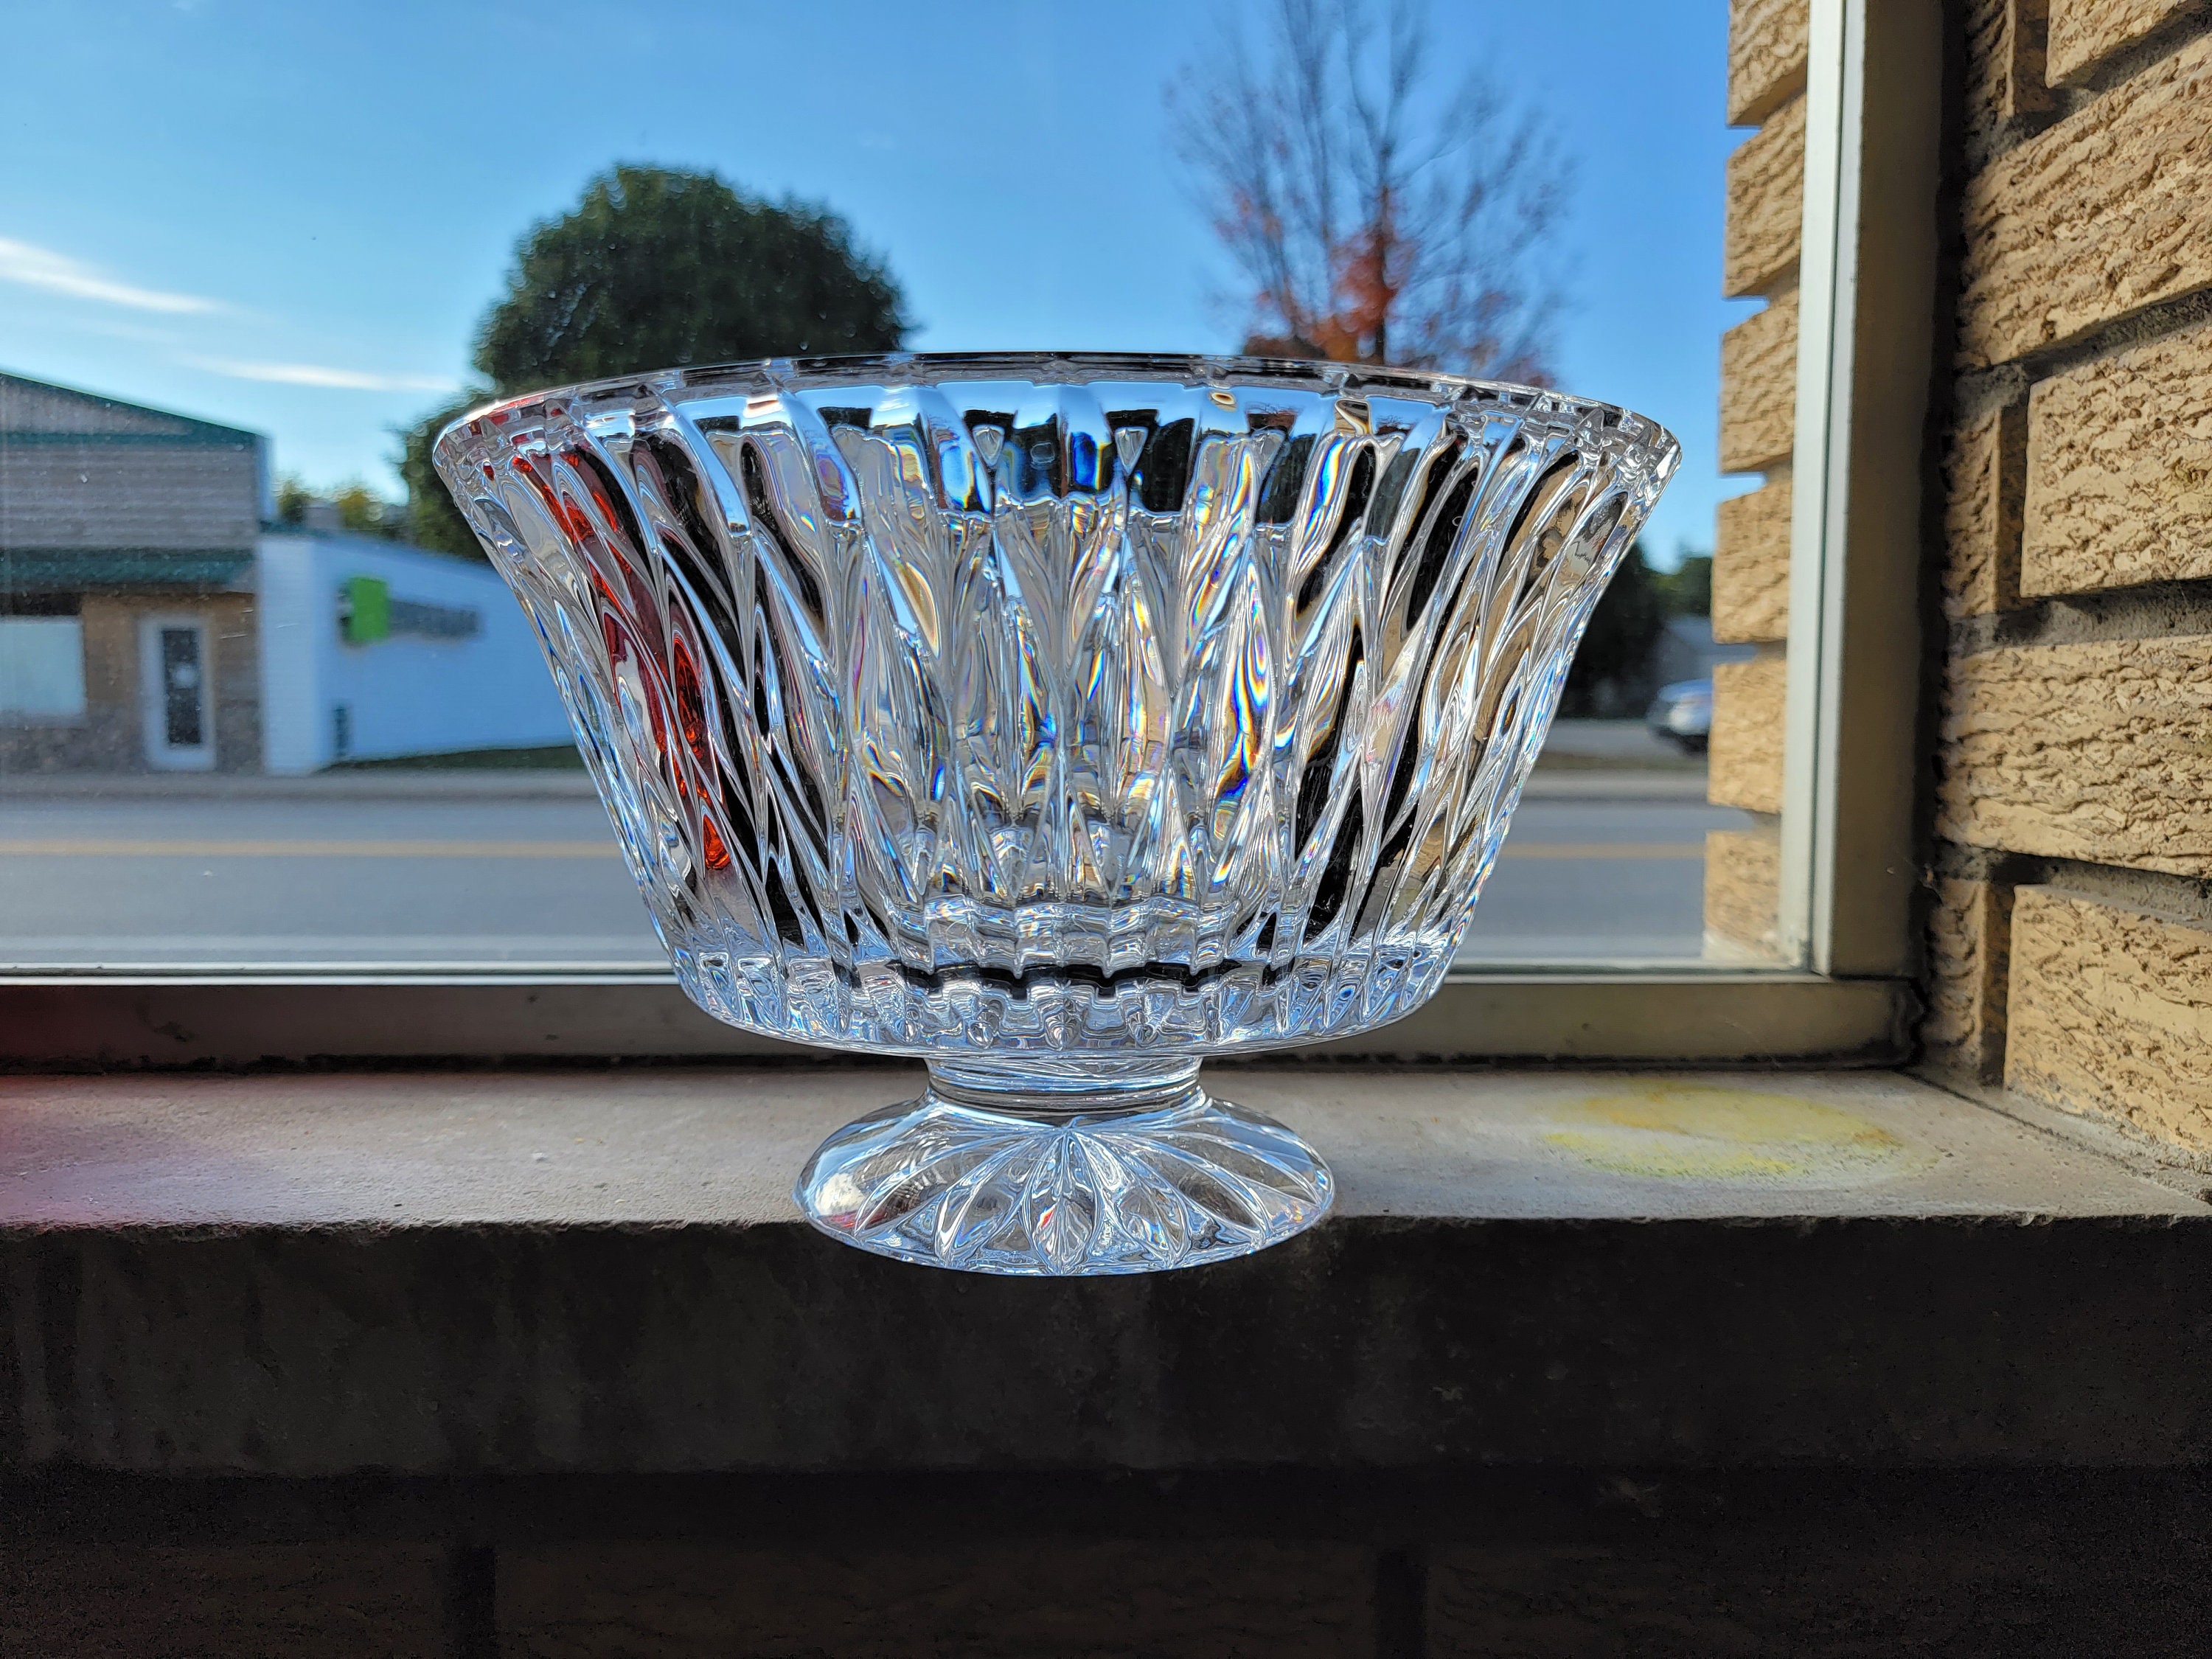 FRISCO Chevron Design Glass Bowl with Silicone Sleeve, Medium: 4